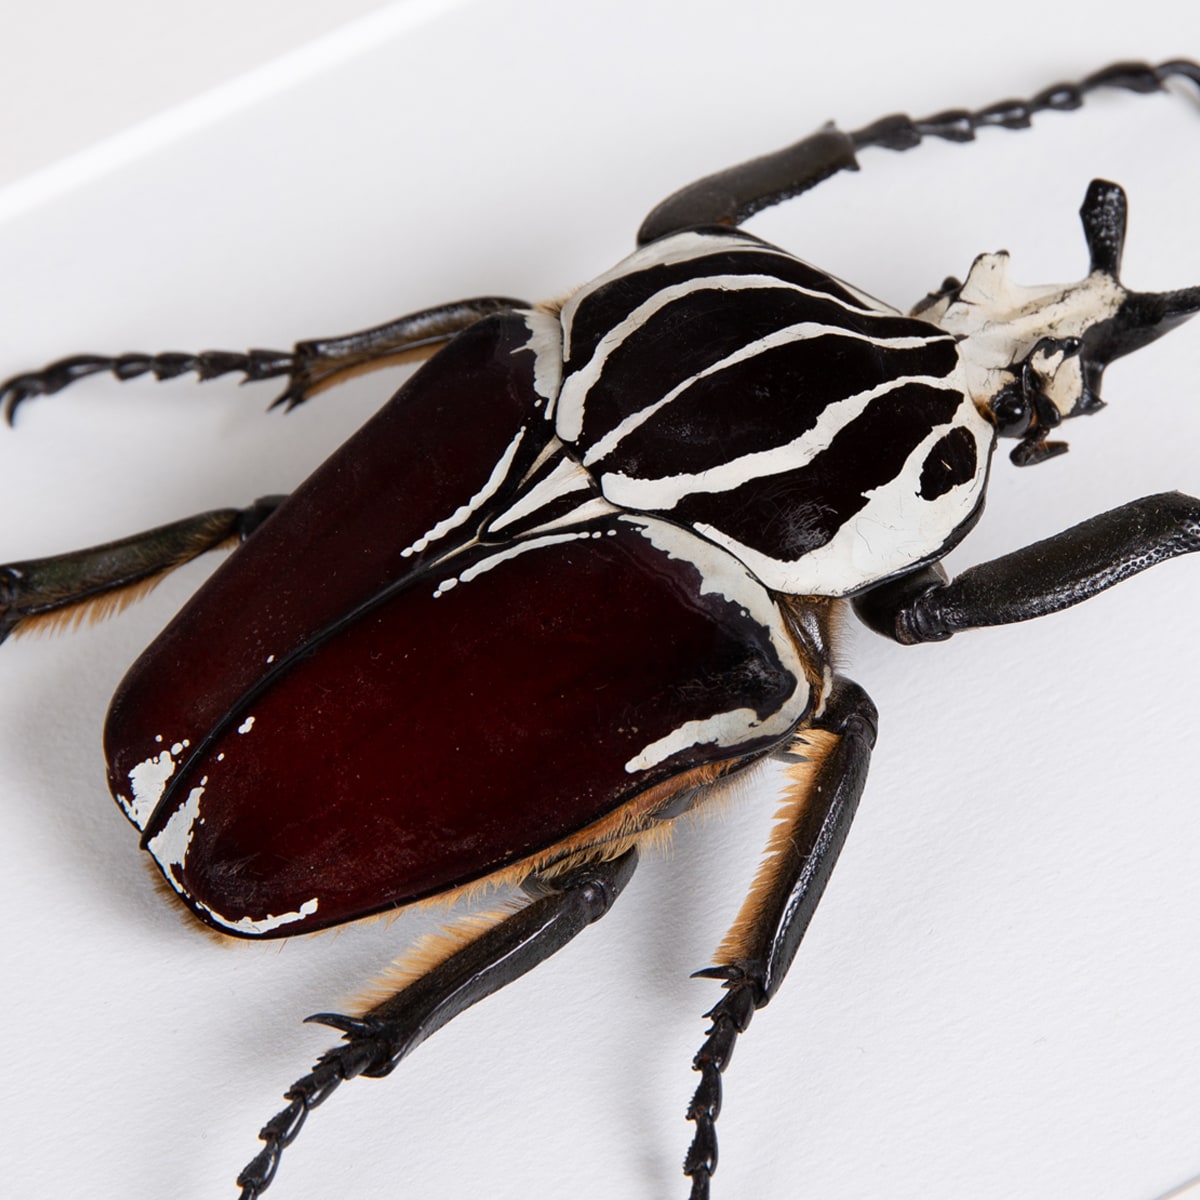 Goliath Beetle in Box Frame (Goliathus goliatus apicalis)